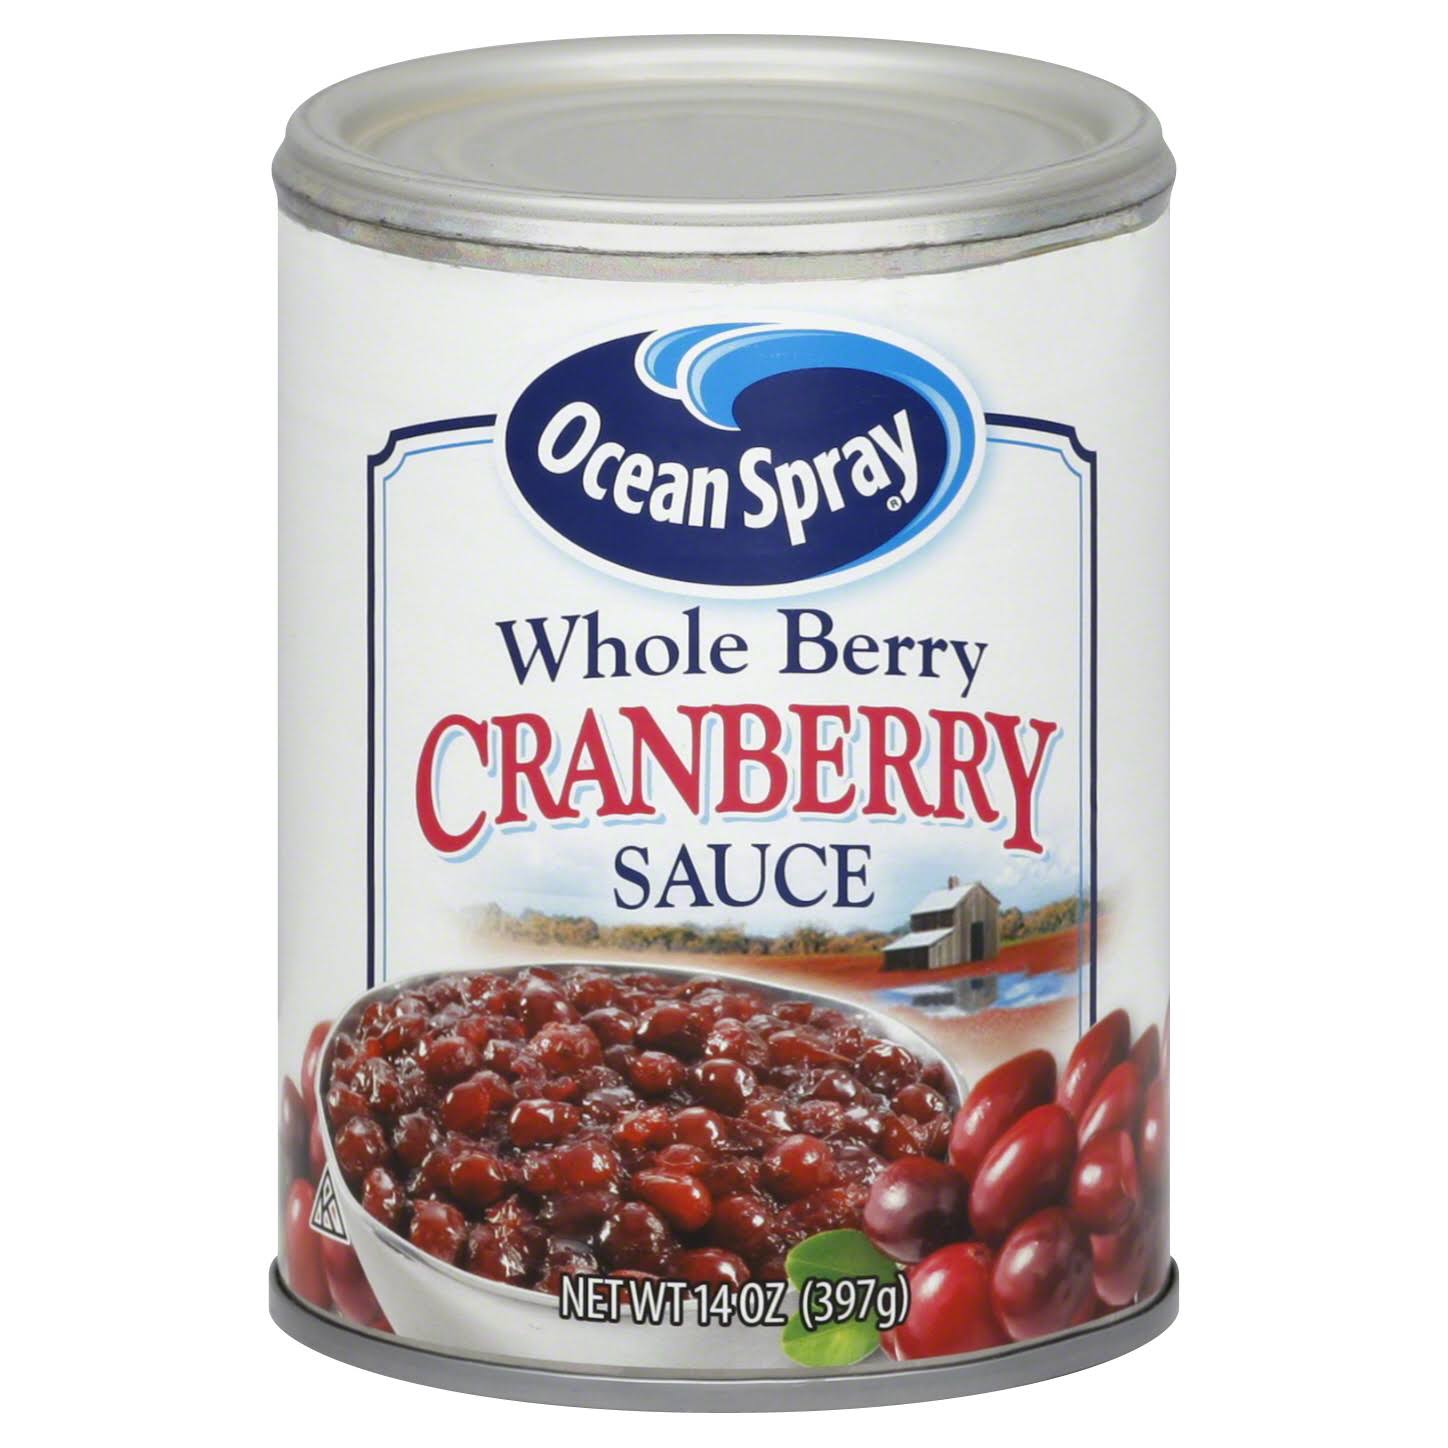 Ocean Spray Whole Berry Cranberry Sauce - 397g